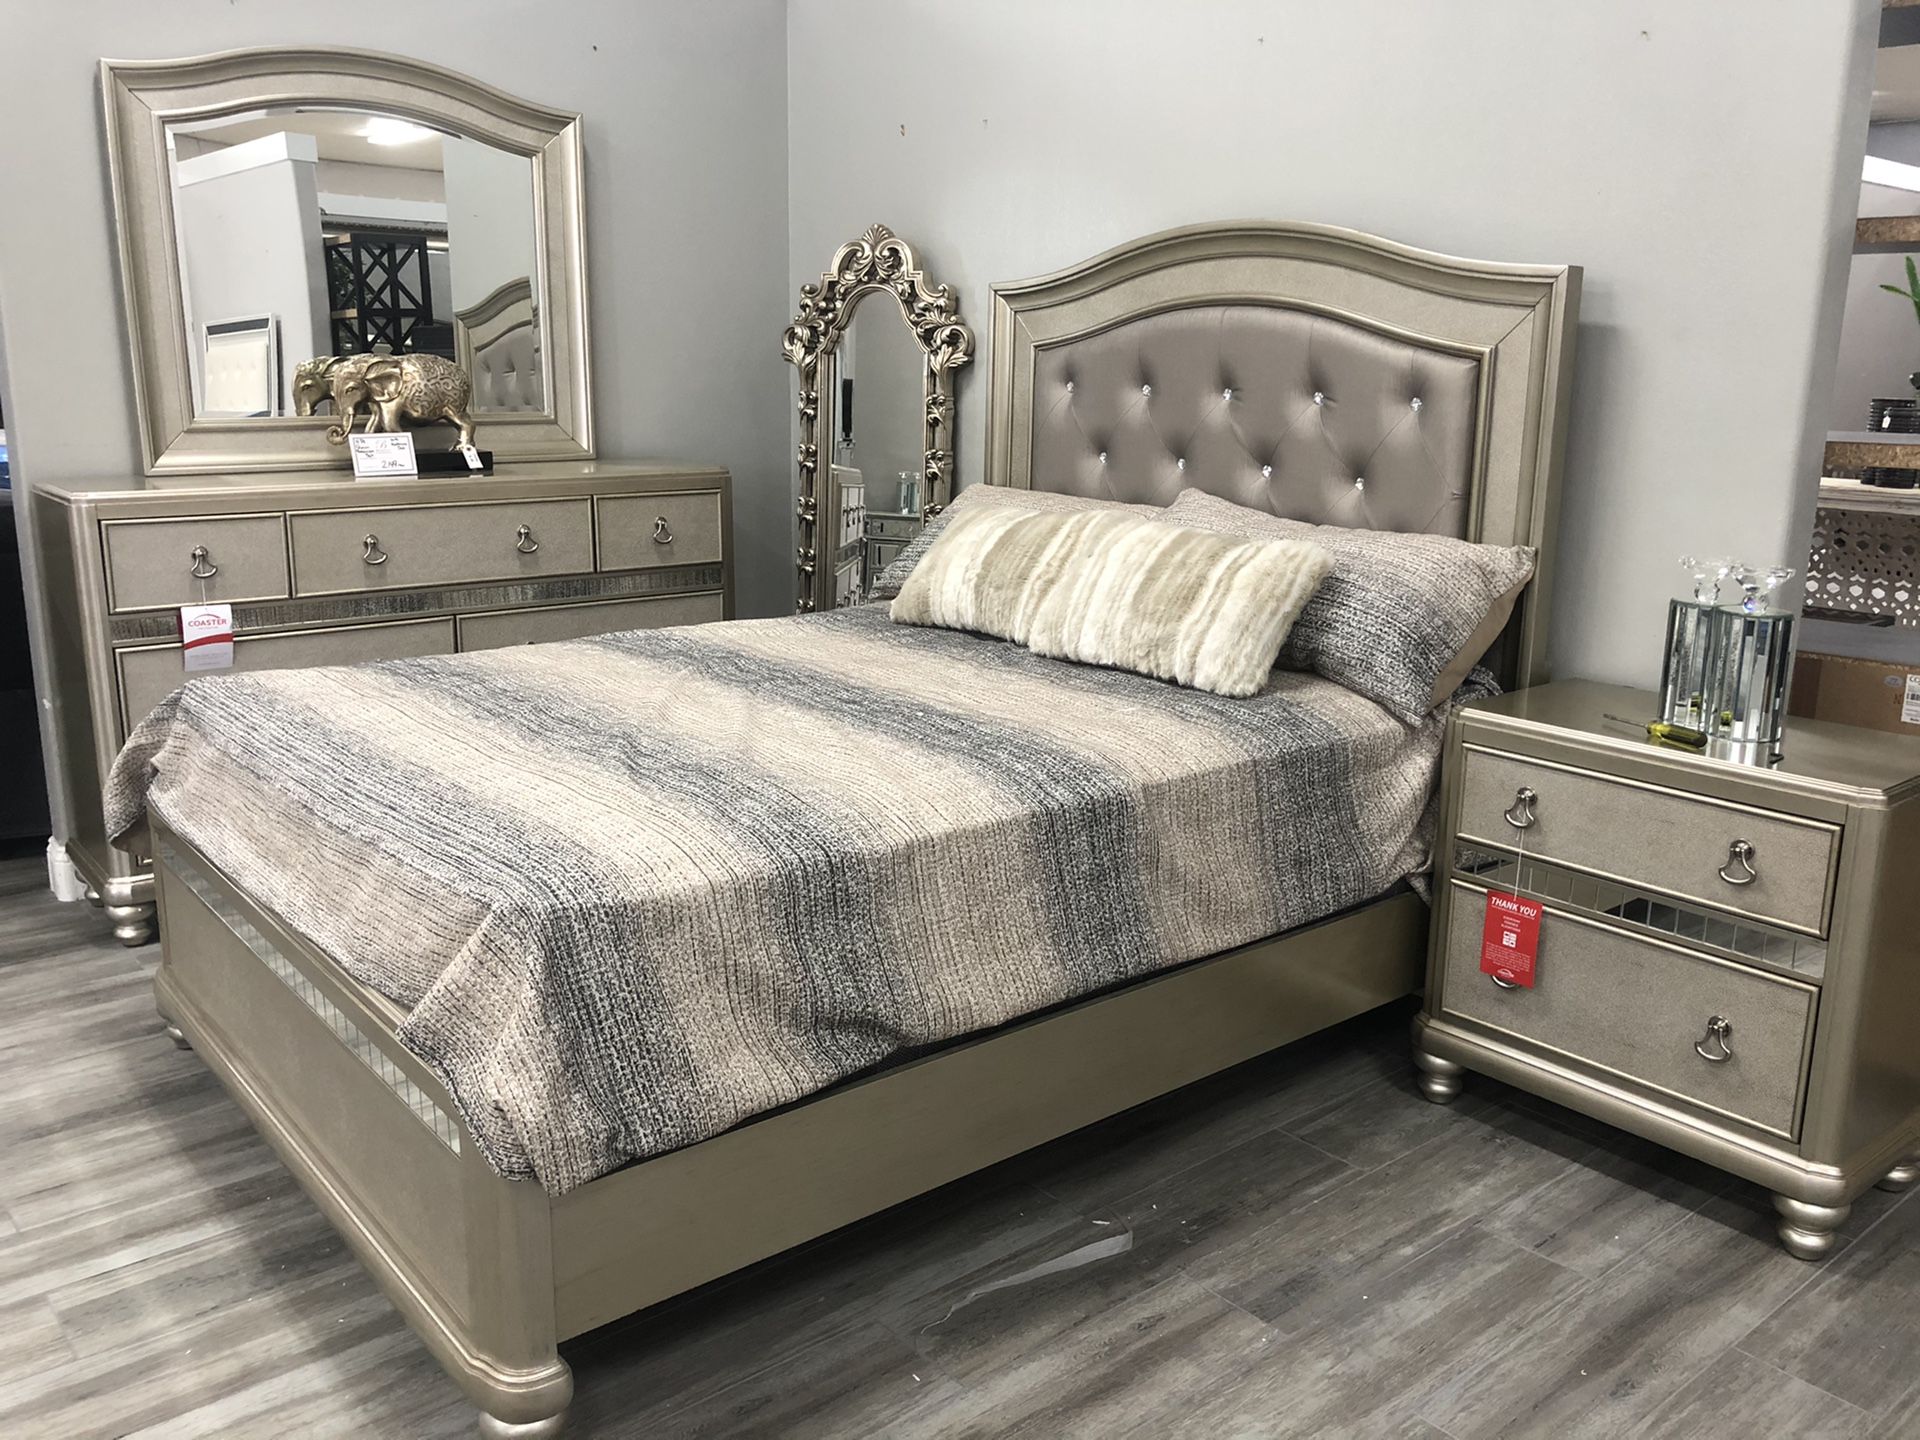 Queen 4pc set with mattress